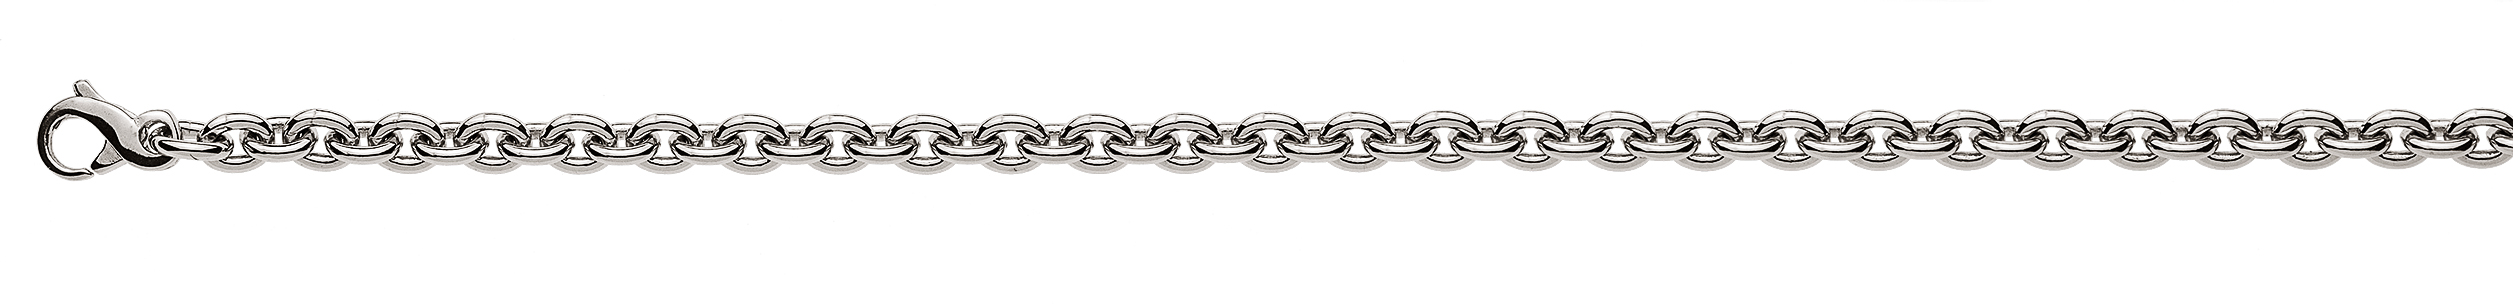 AURONOS Prestige Bracelet ancre rond or blanc 18K 19cm 3.9mm